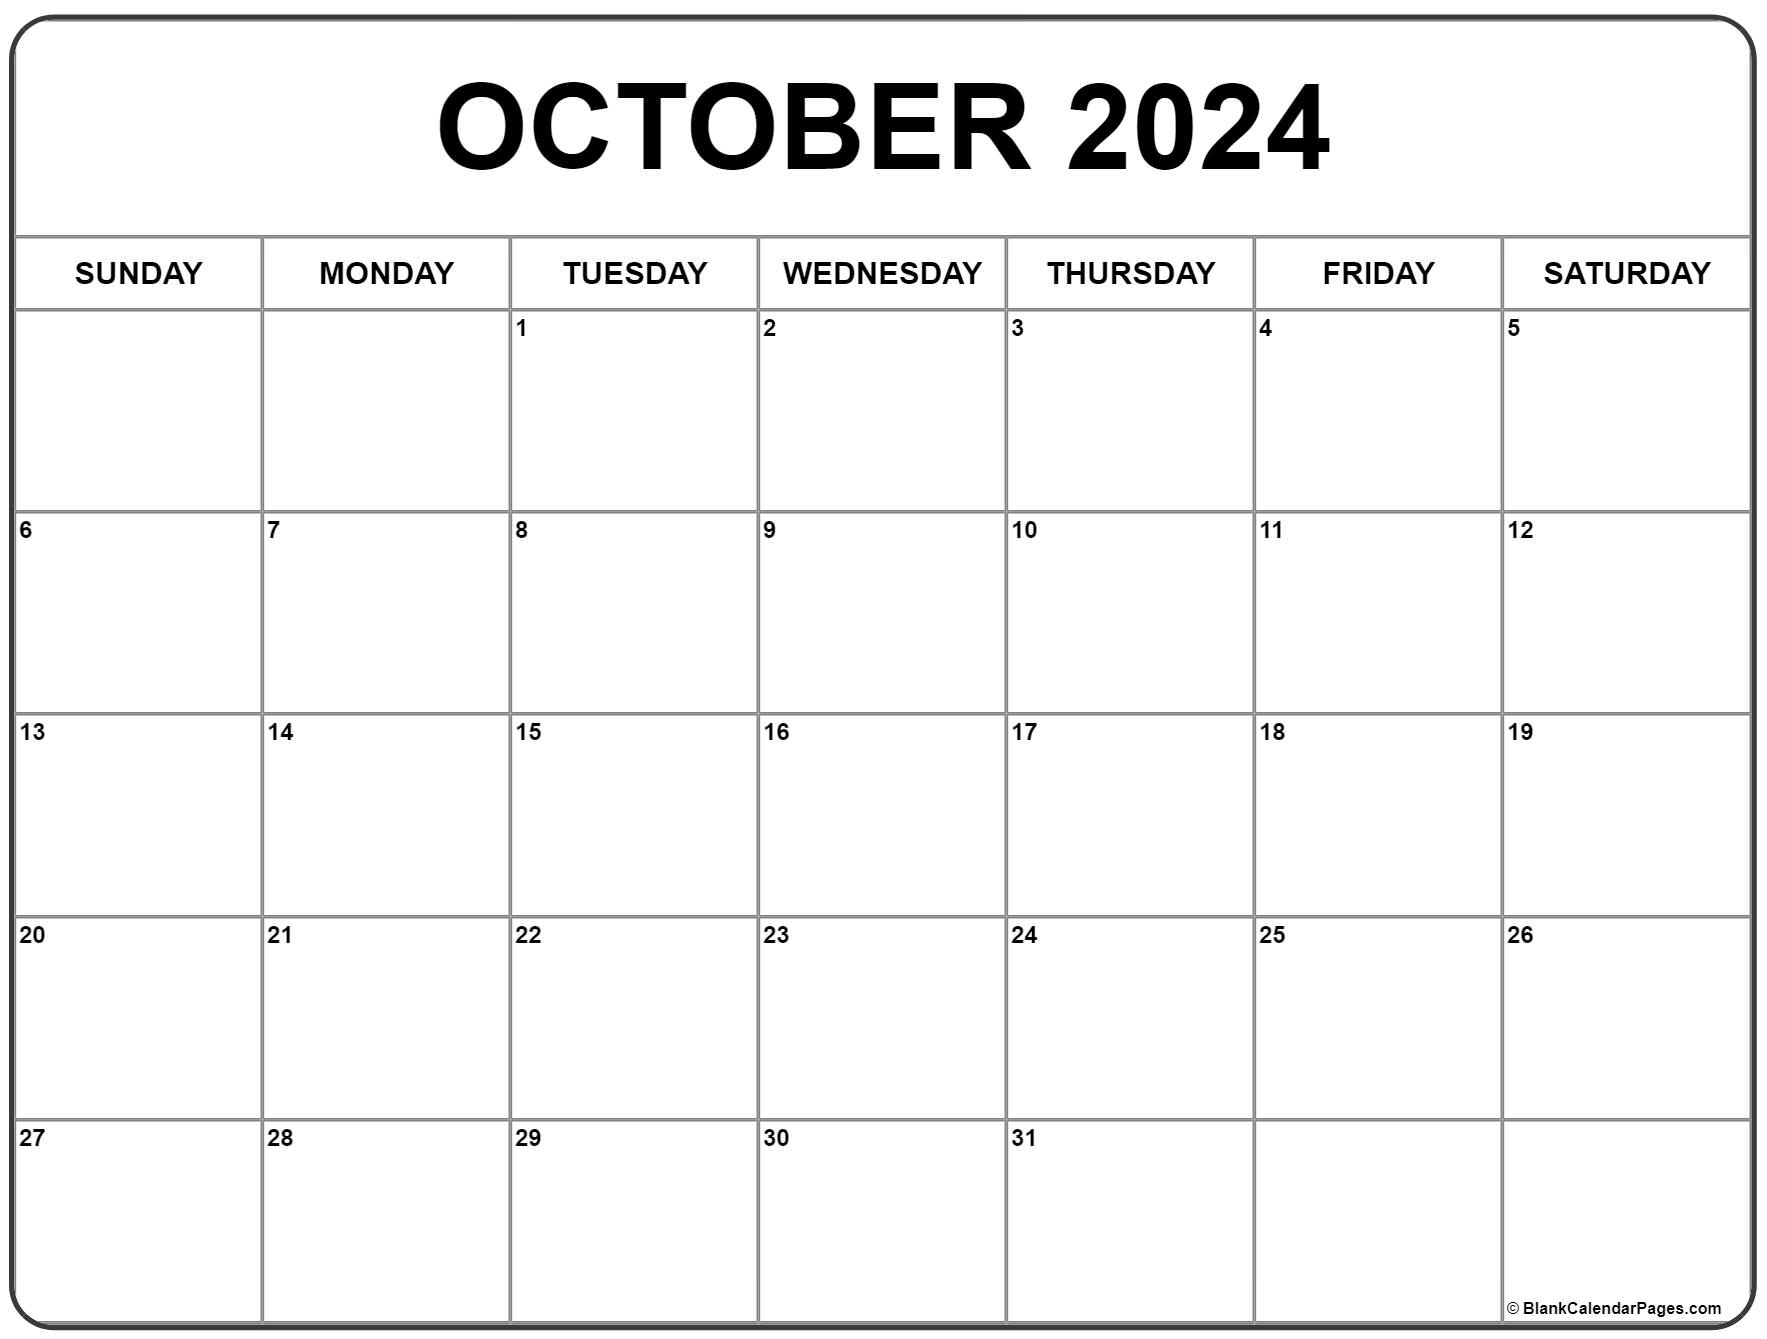 October 2024 Calendar | Free Printable Calendar for Printable October 2024 Calendar